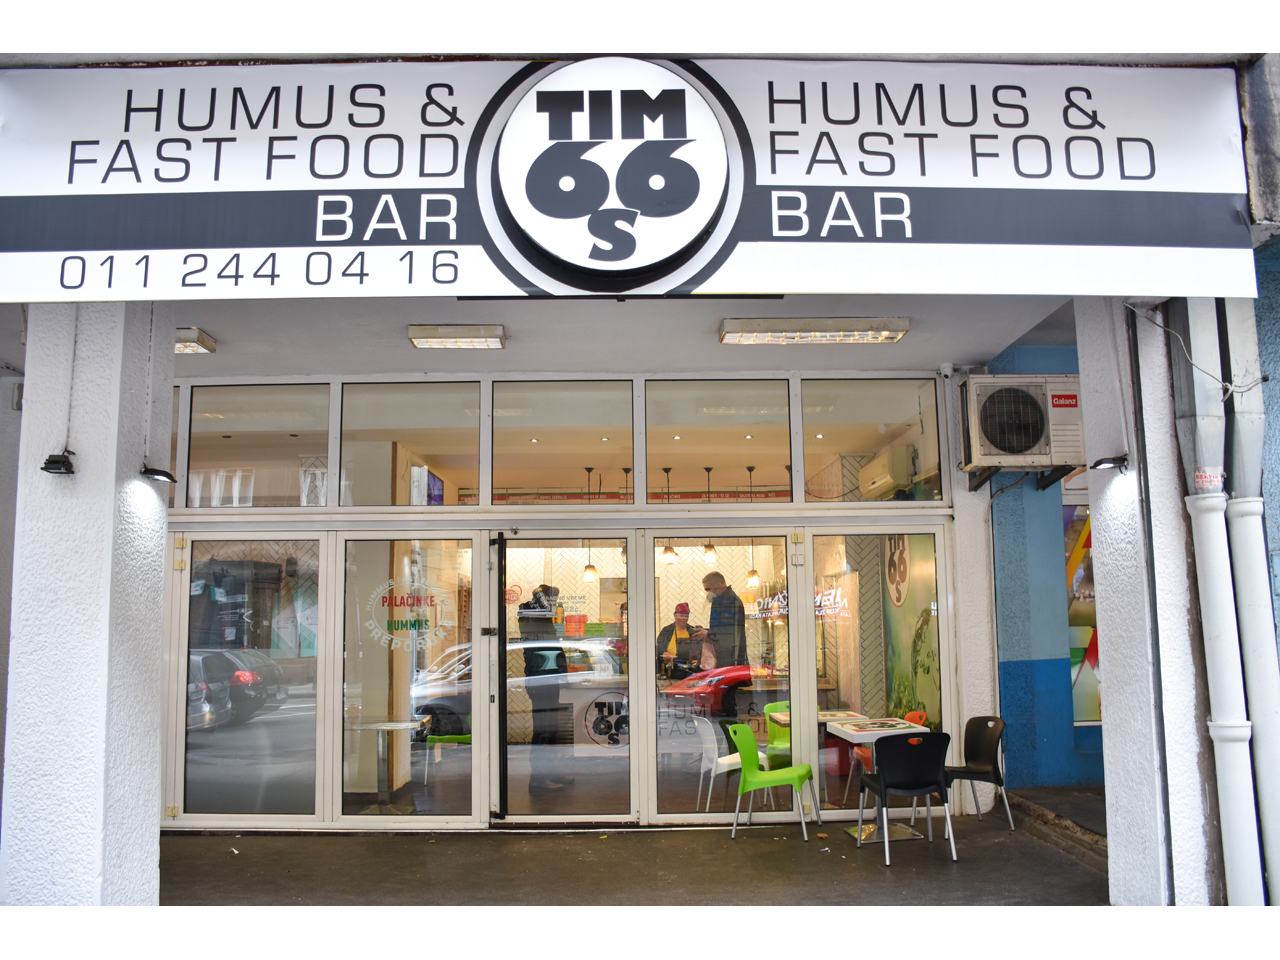 HUMUS & FAST FOOD BAR TIM 66 S Vegetarian restaurants, macrobiotic food Belgrade - Photo 1